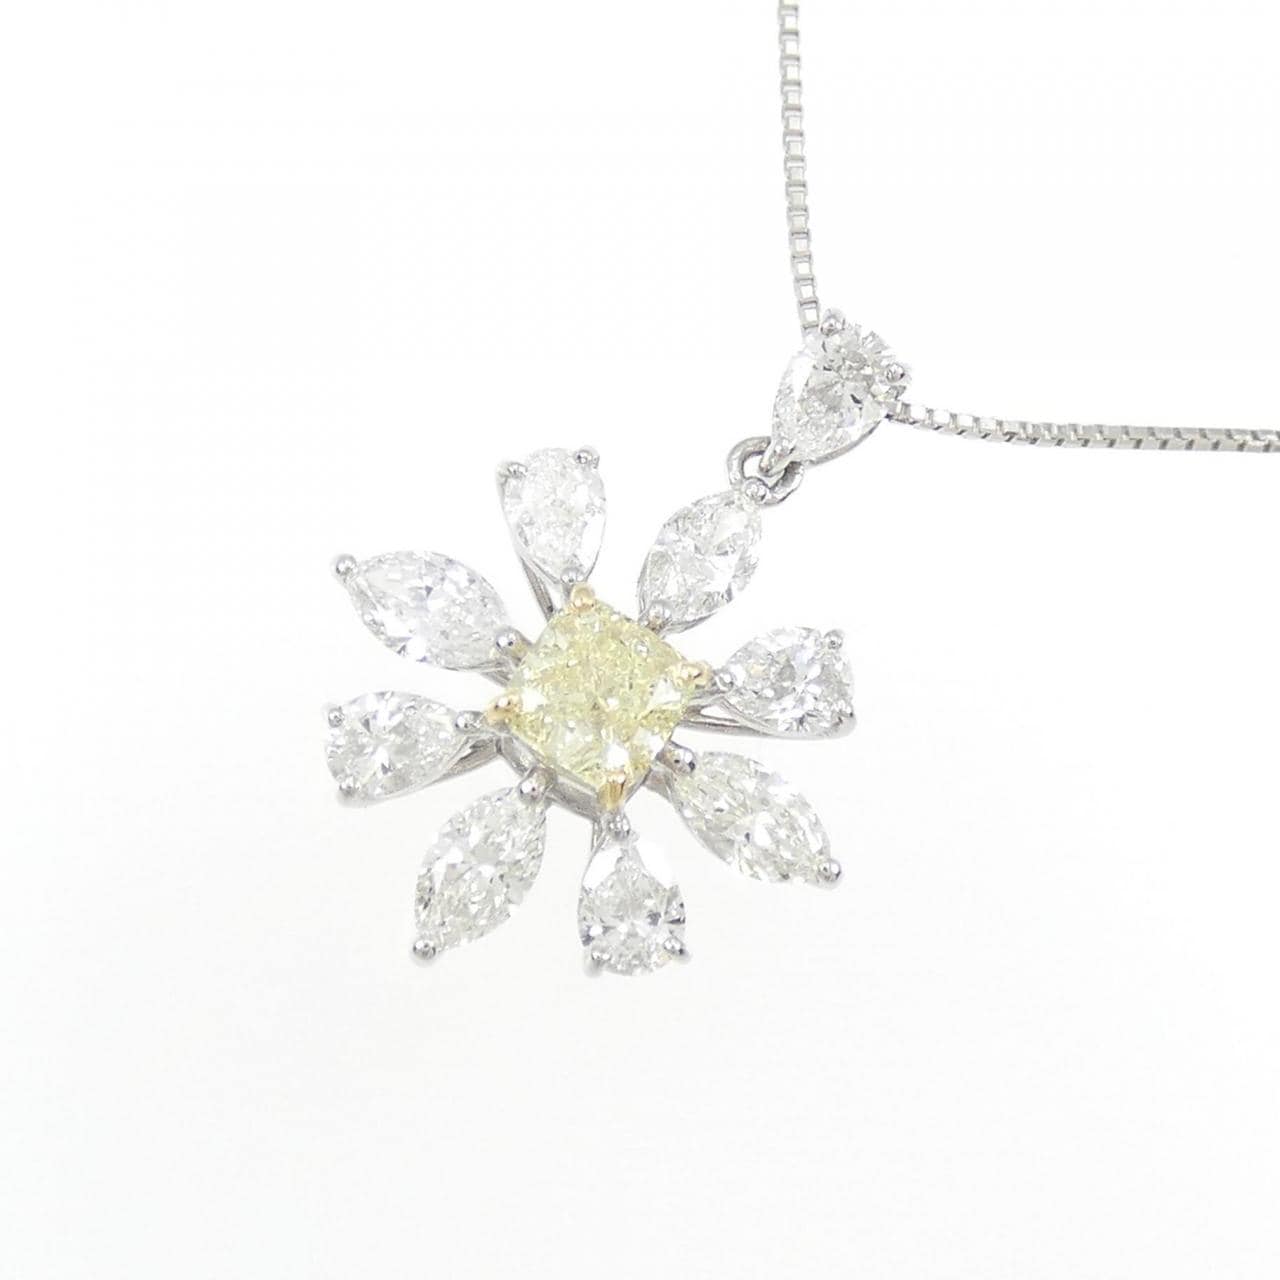 [BRAND NEW] PT/K18YG Diamond necklace 0.31CT